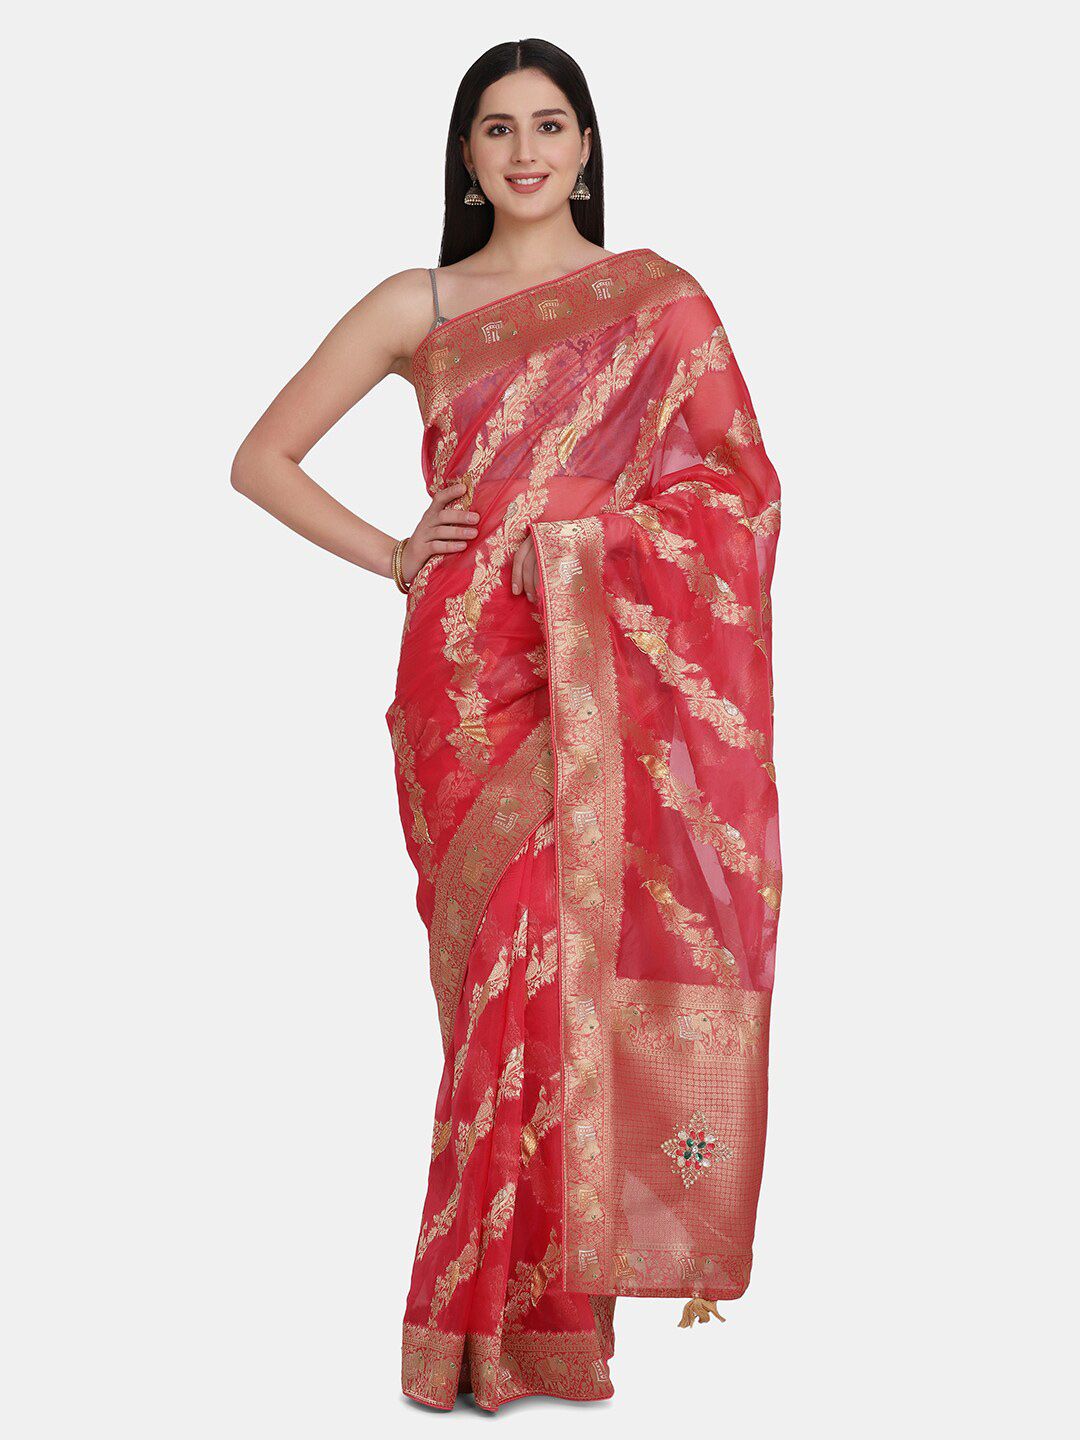 BOMBAY SELECTIONS Pink & Gold-Toned Ethnic Motifs Organza Banarasi Saree Price in India